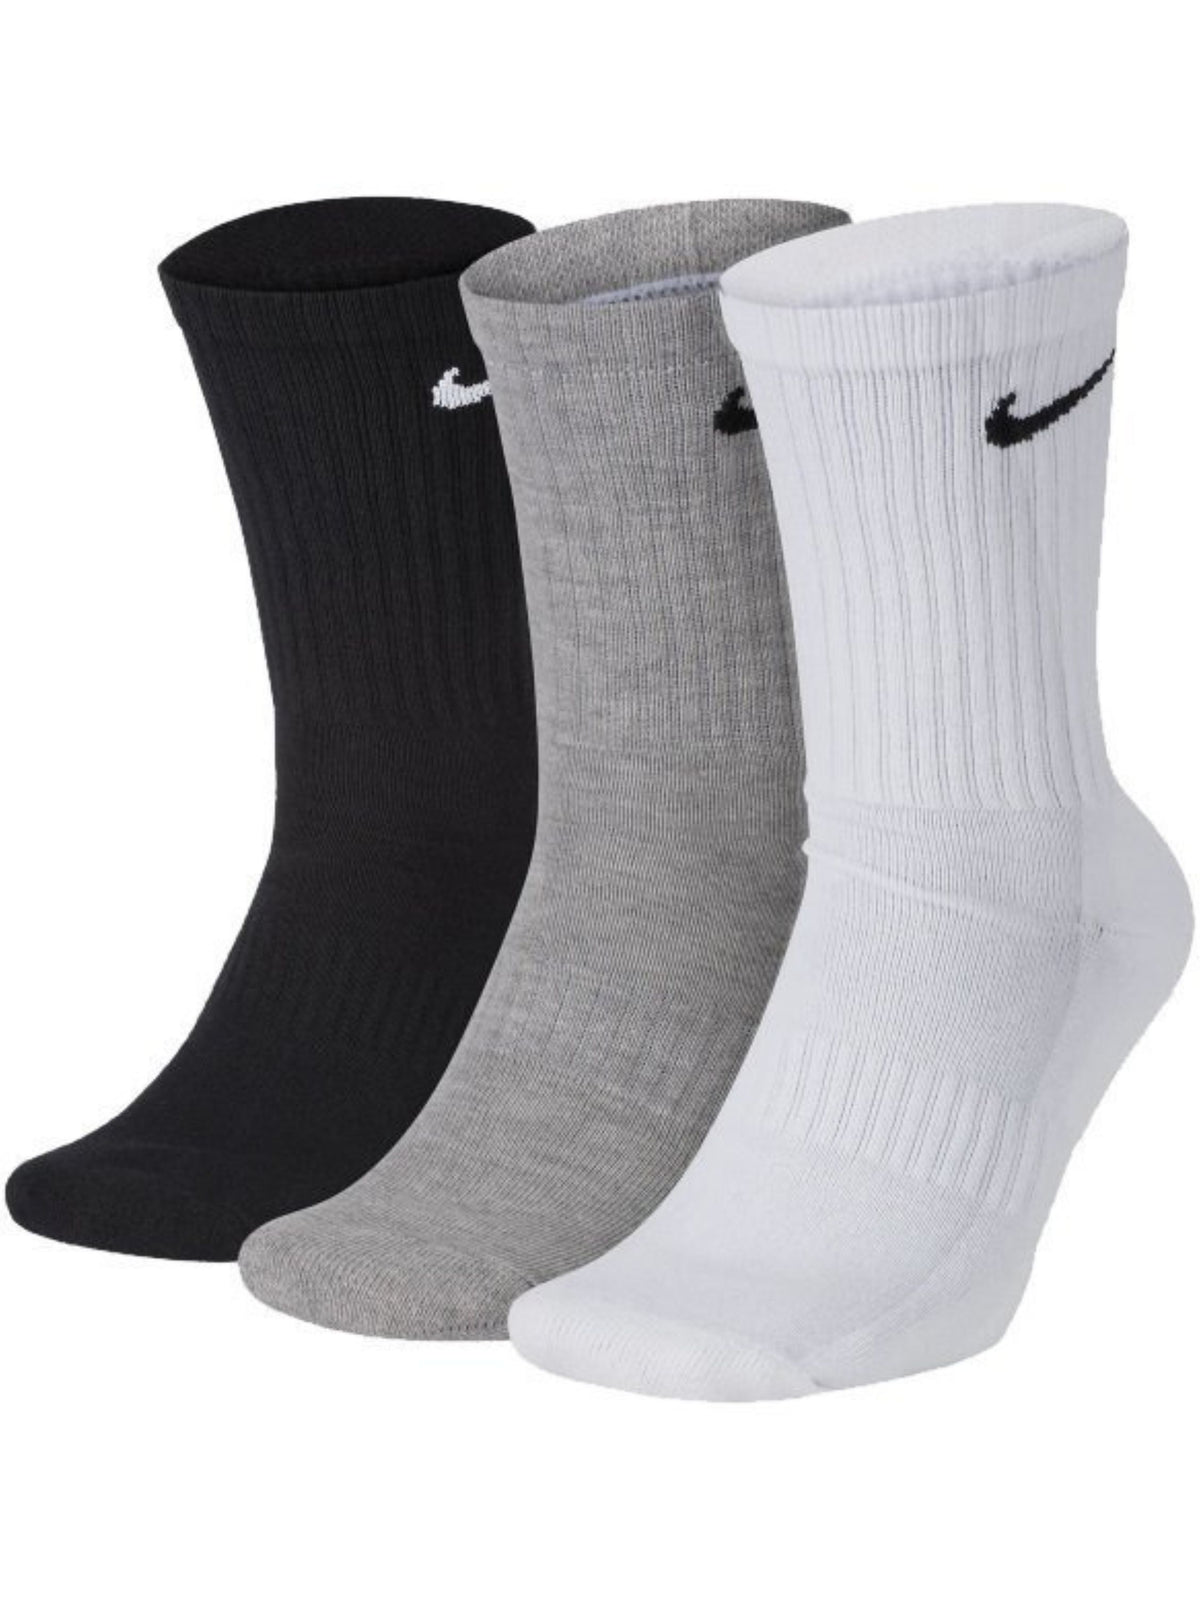 Nike Socks Sports Mens 3 Pairs Cotton Rich Designer Soft Crew Sock Size 8-14.5 RAWDENIM RAWDENIM